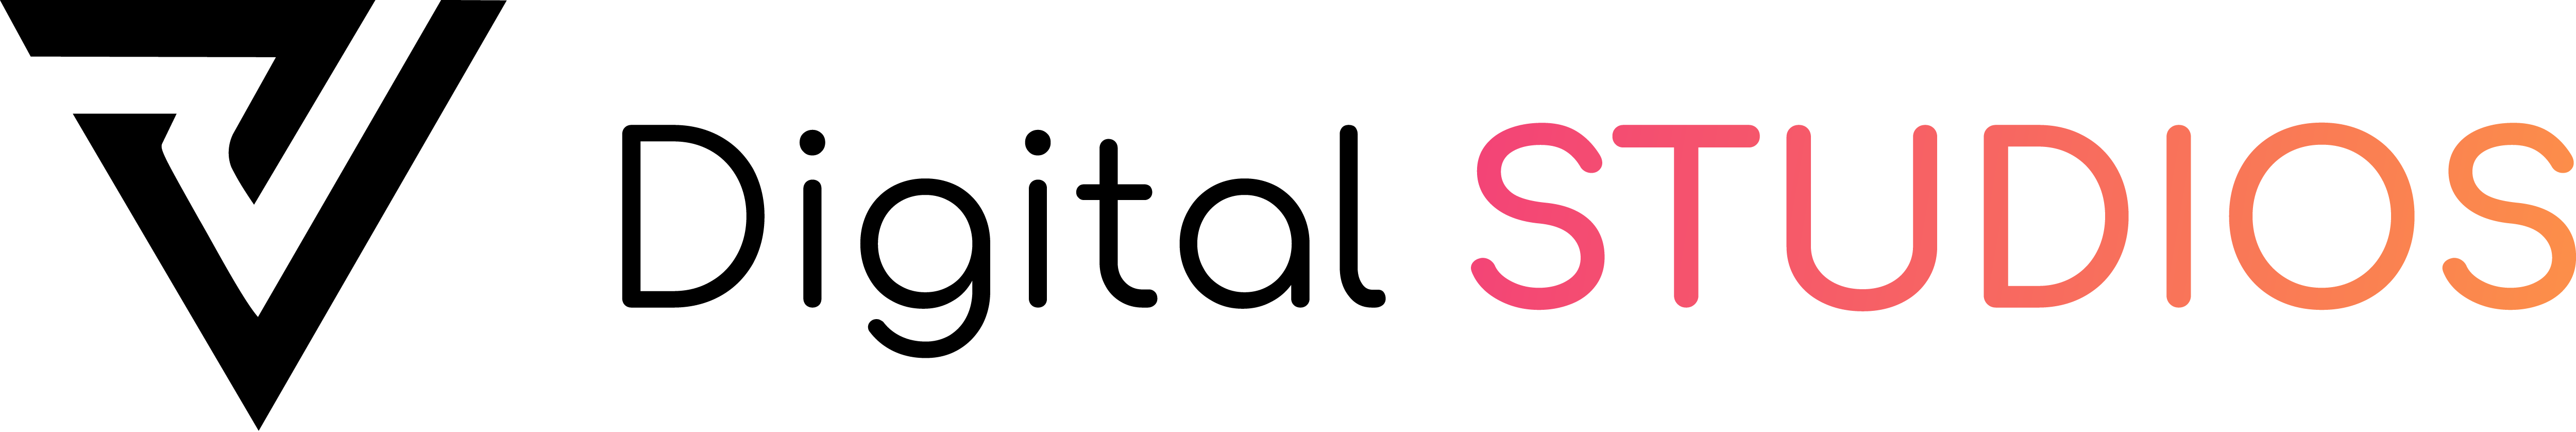 PV-Digital-Studios-Logo